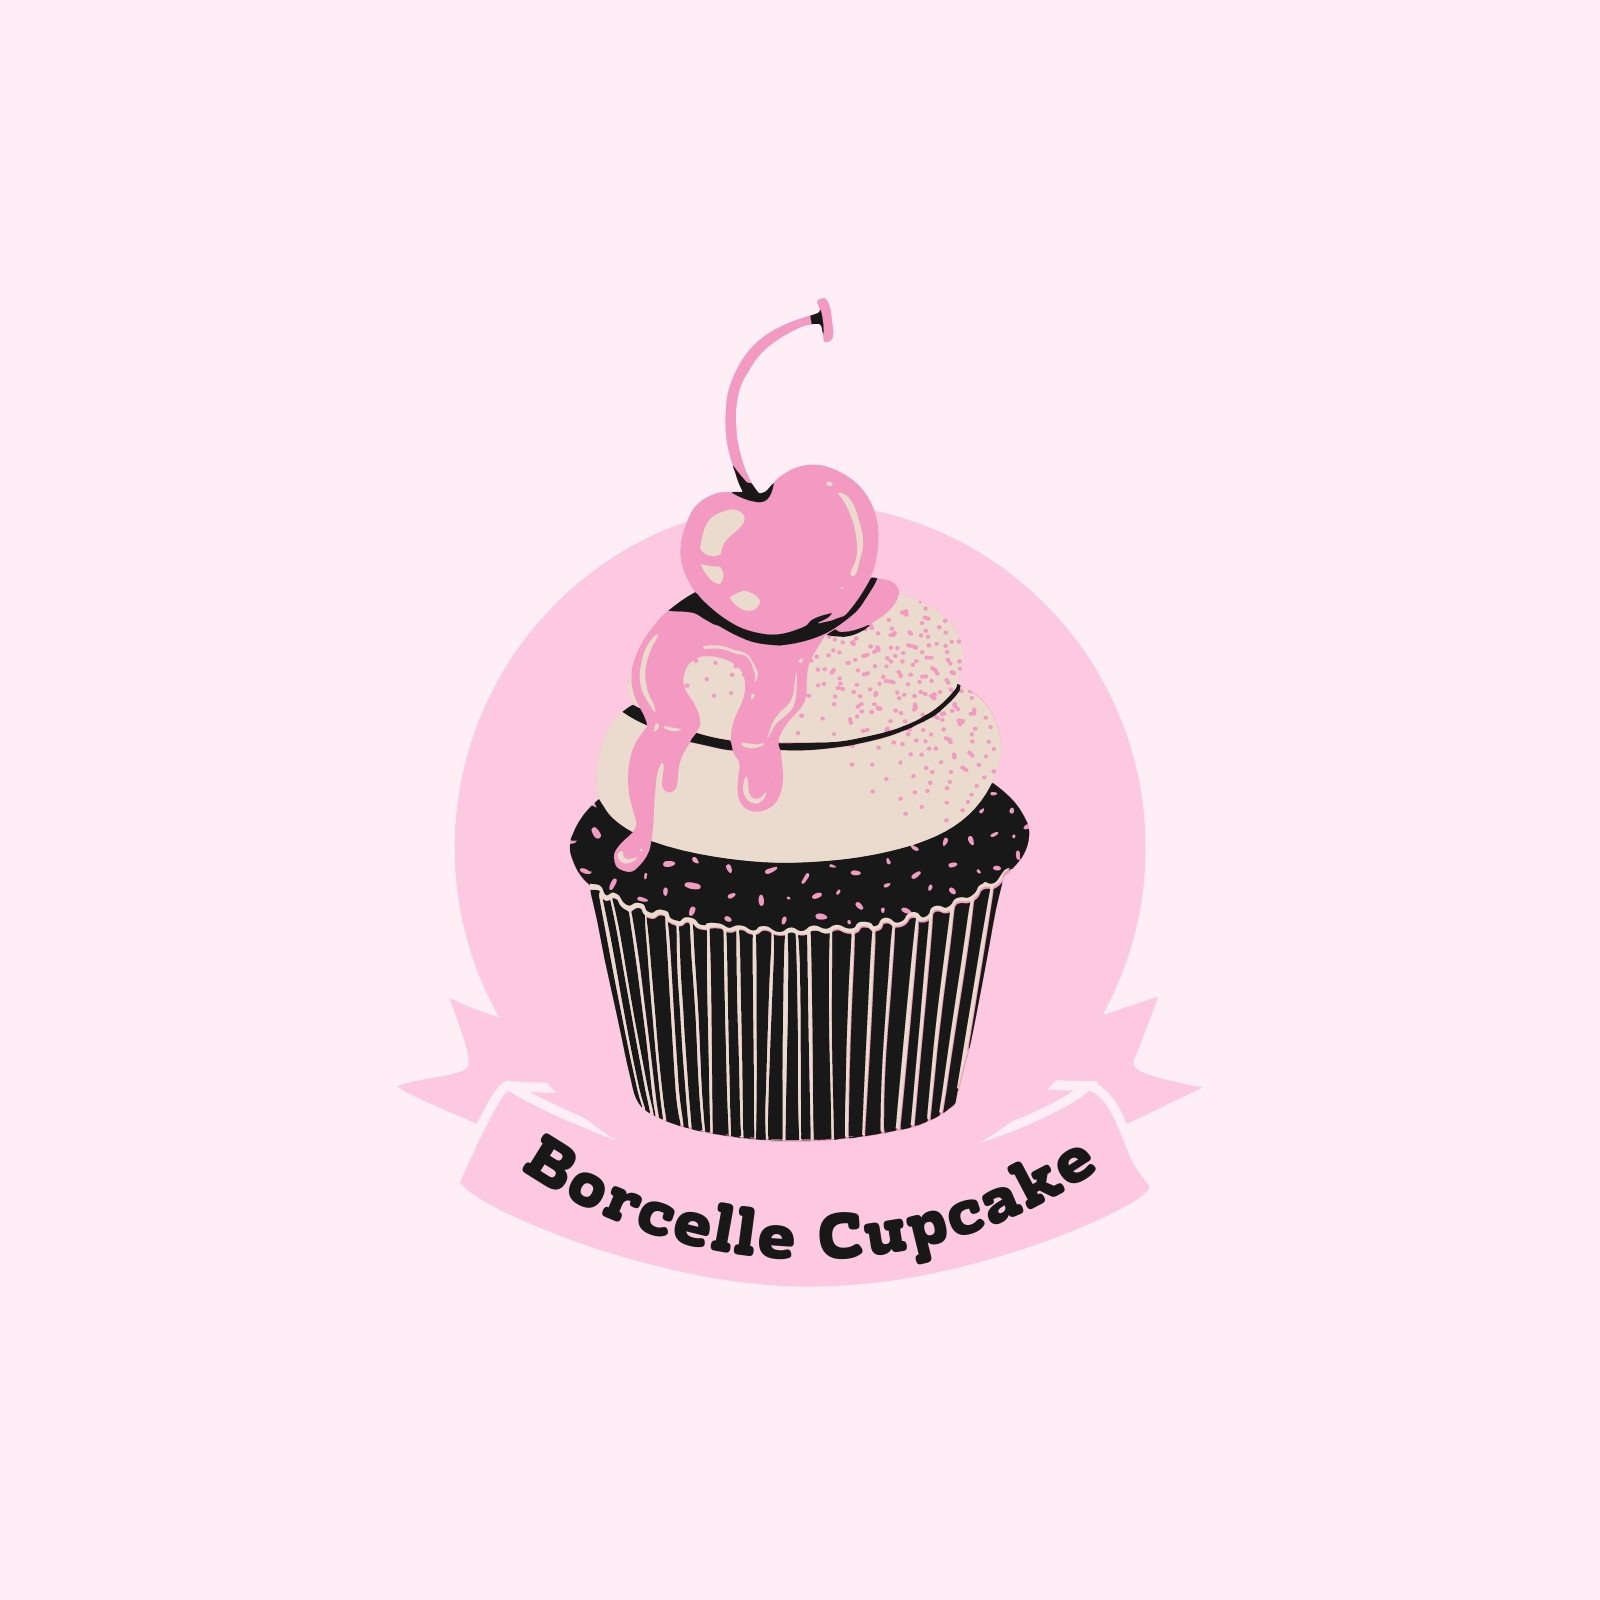 aesthetic minimalist cupcake design